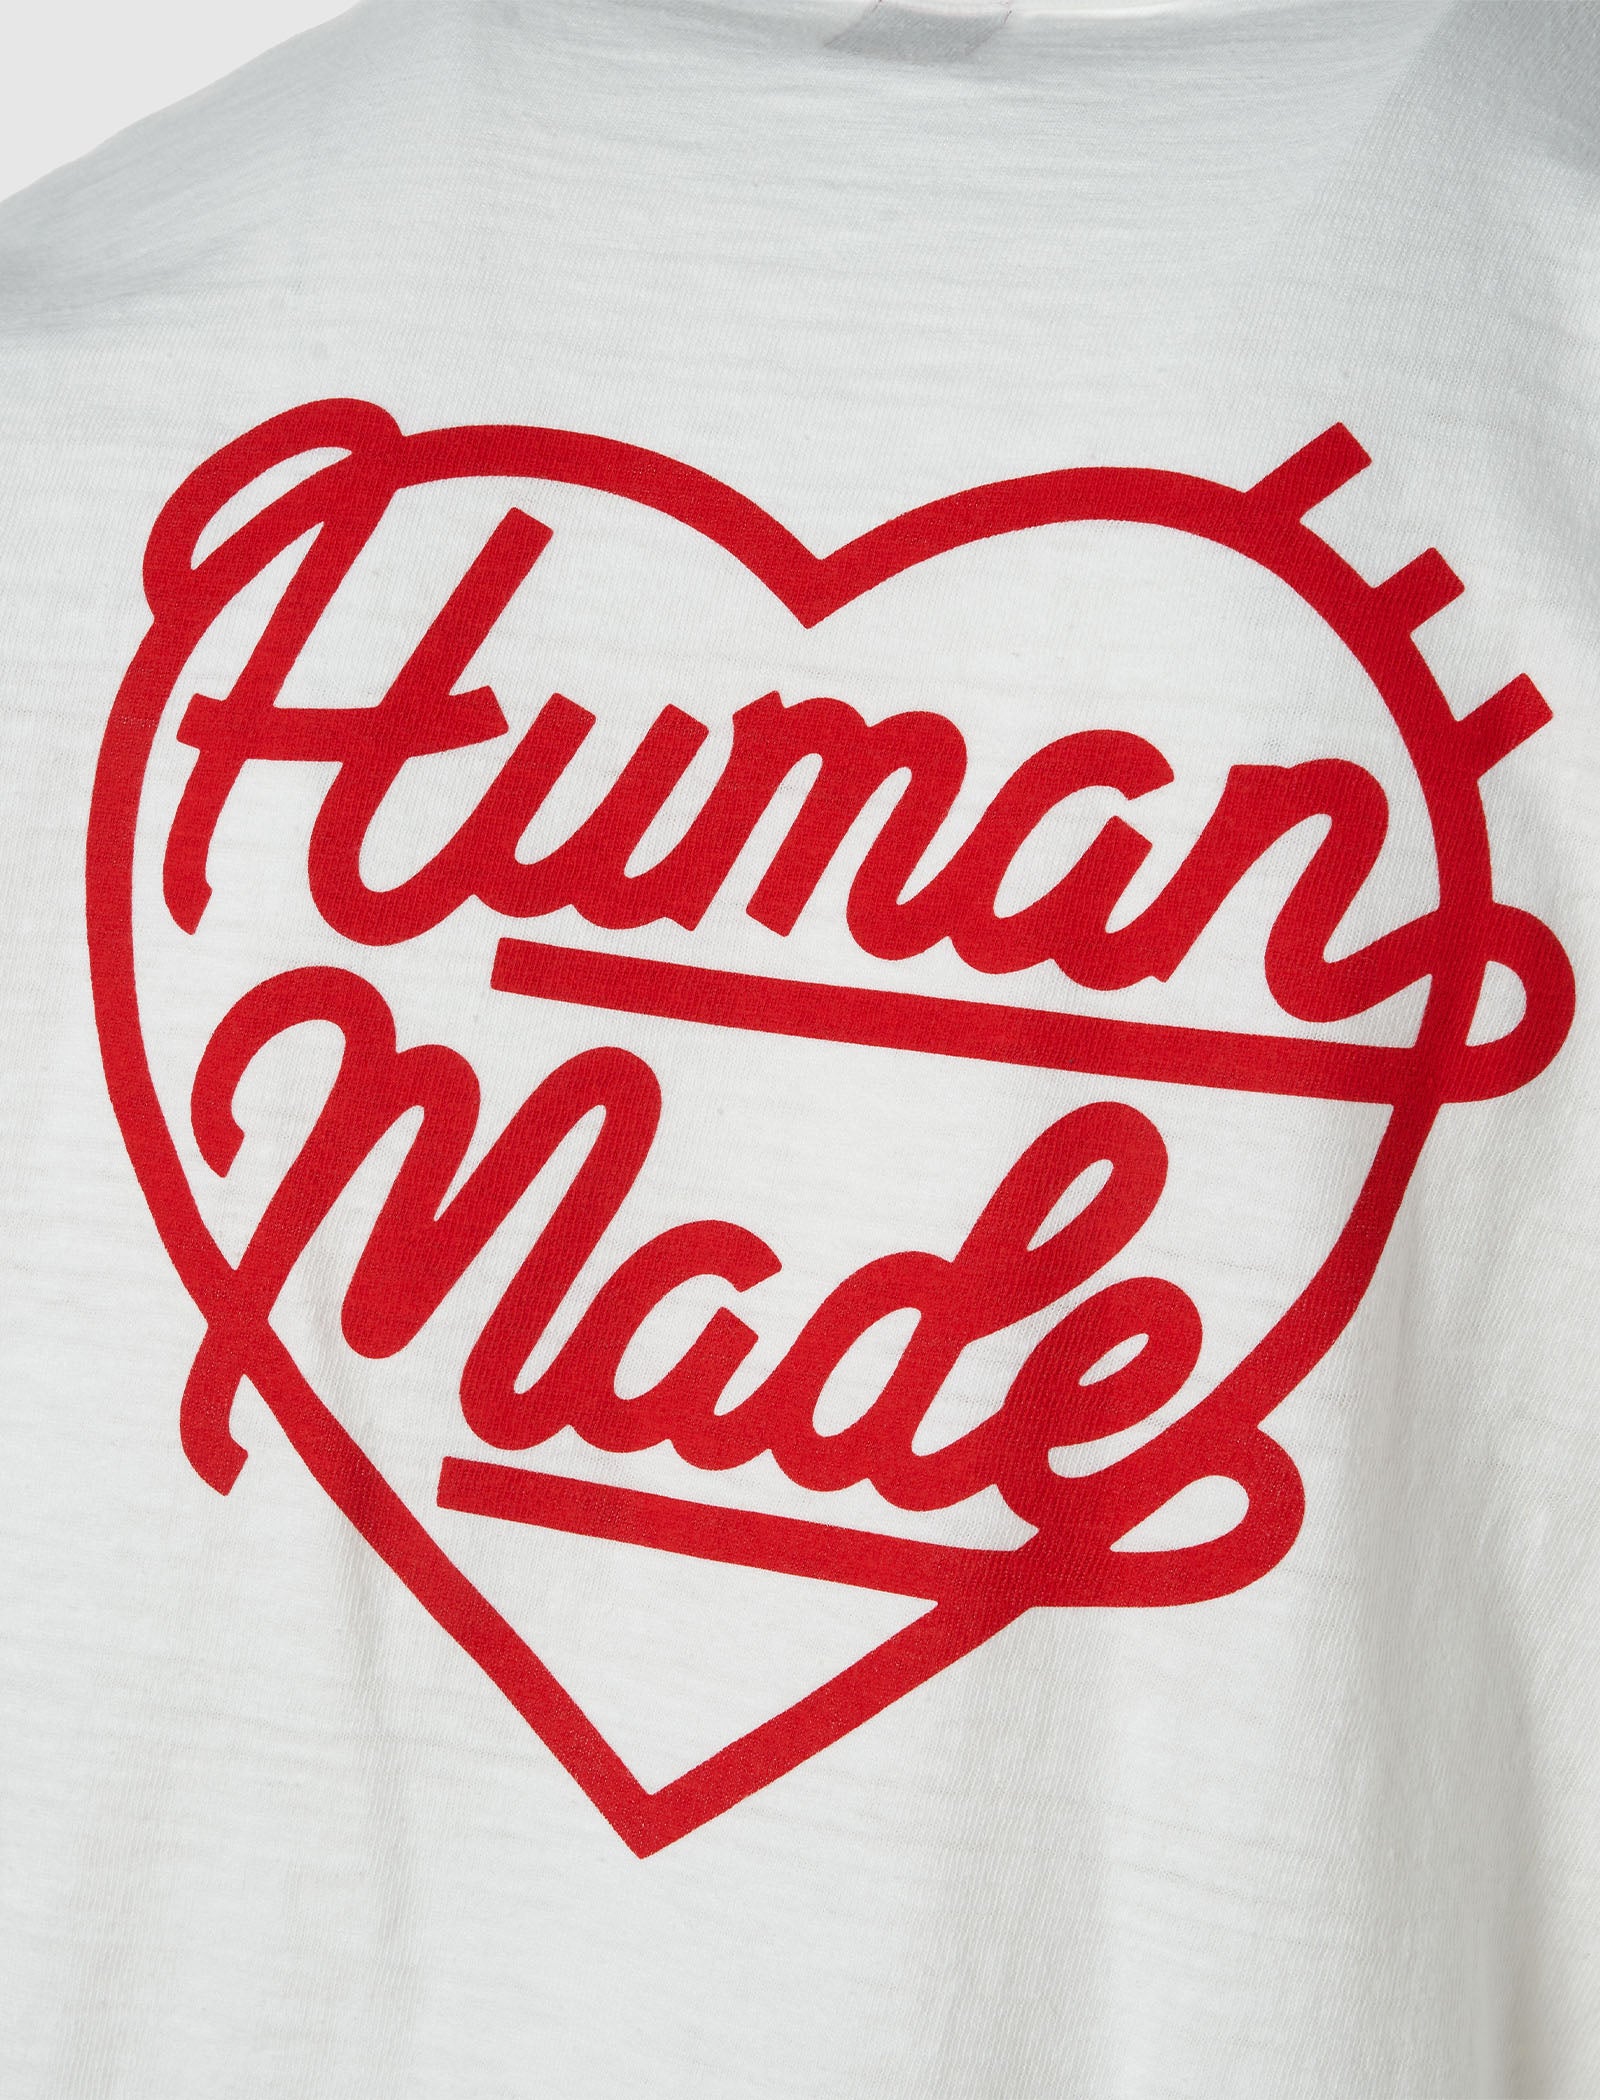 Human Made Heart Logo T-Shirt in Black